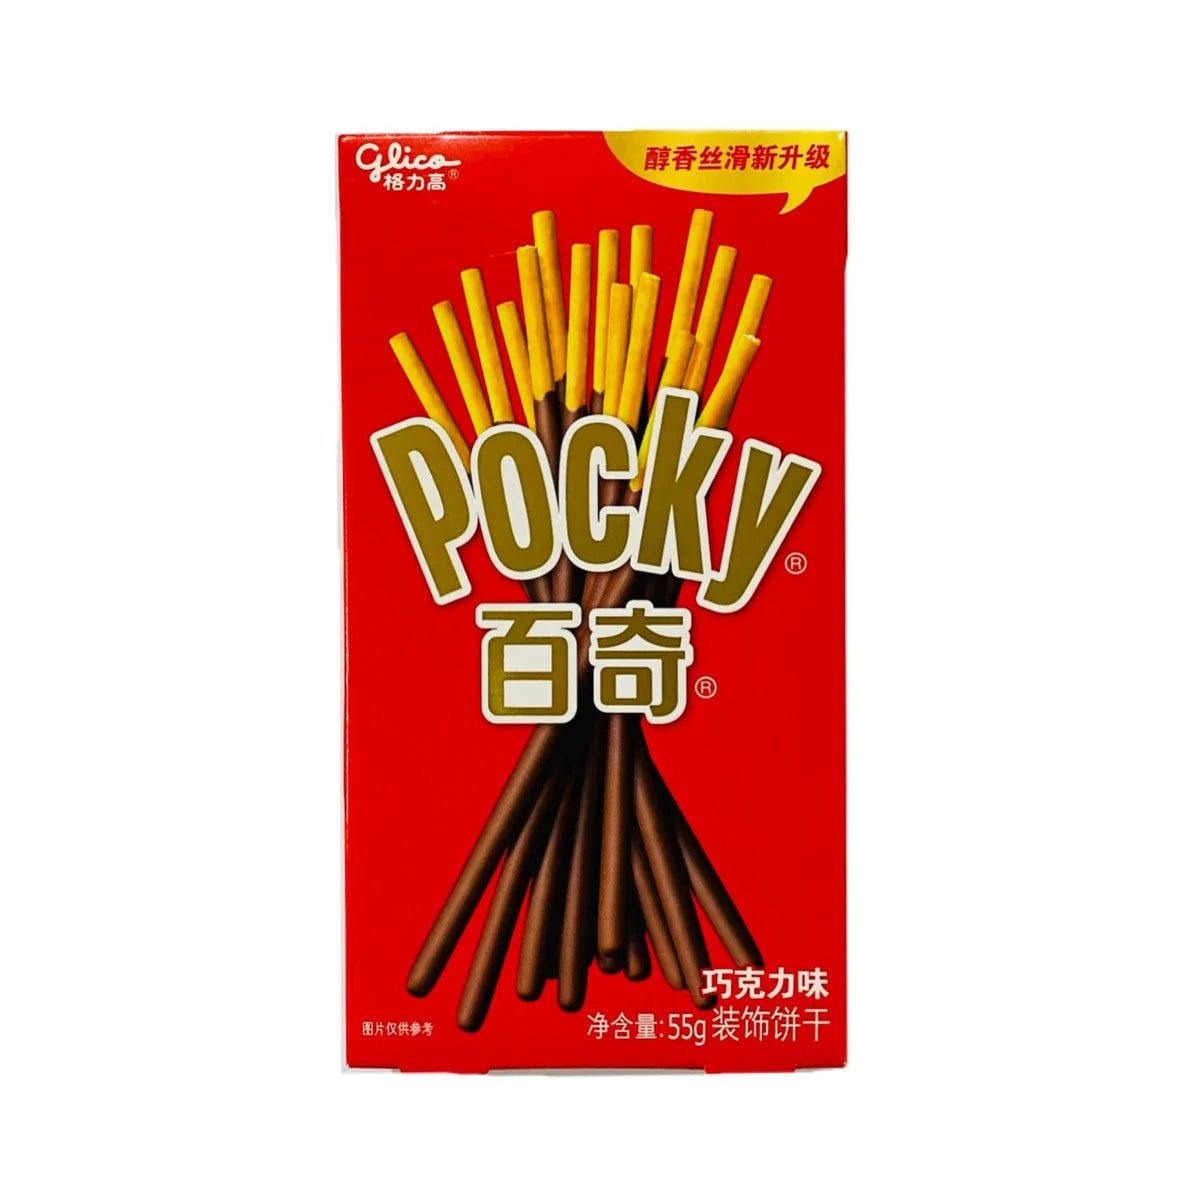 Pocky OG Chocolate JAPAN (36 Count)